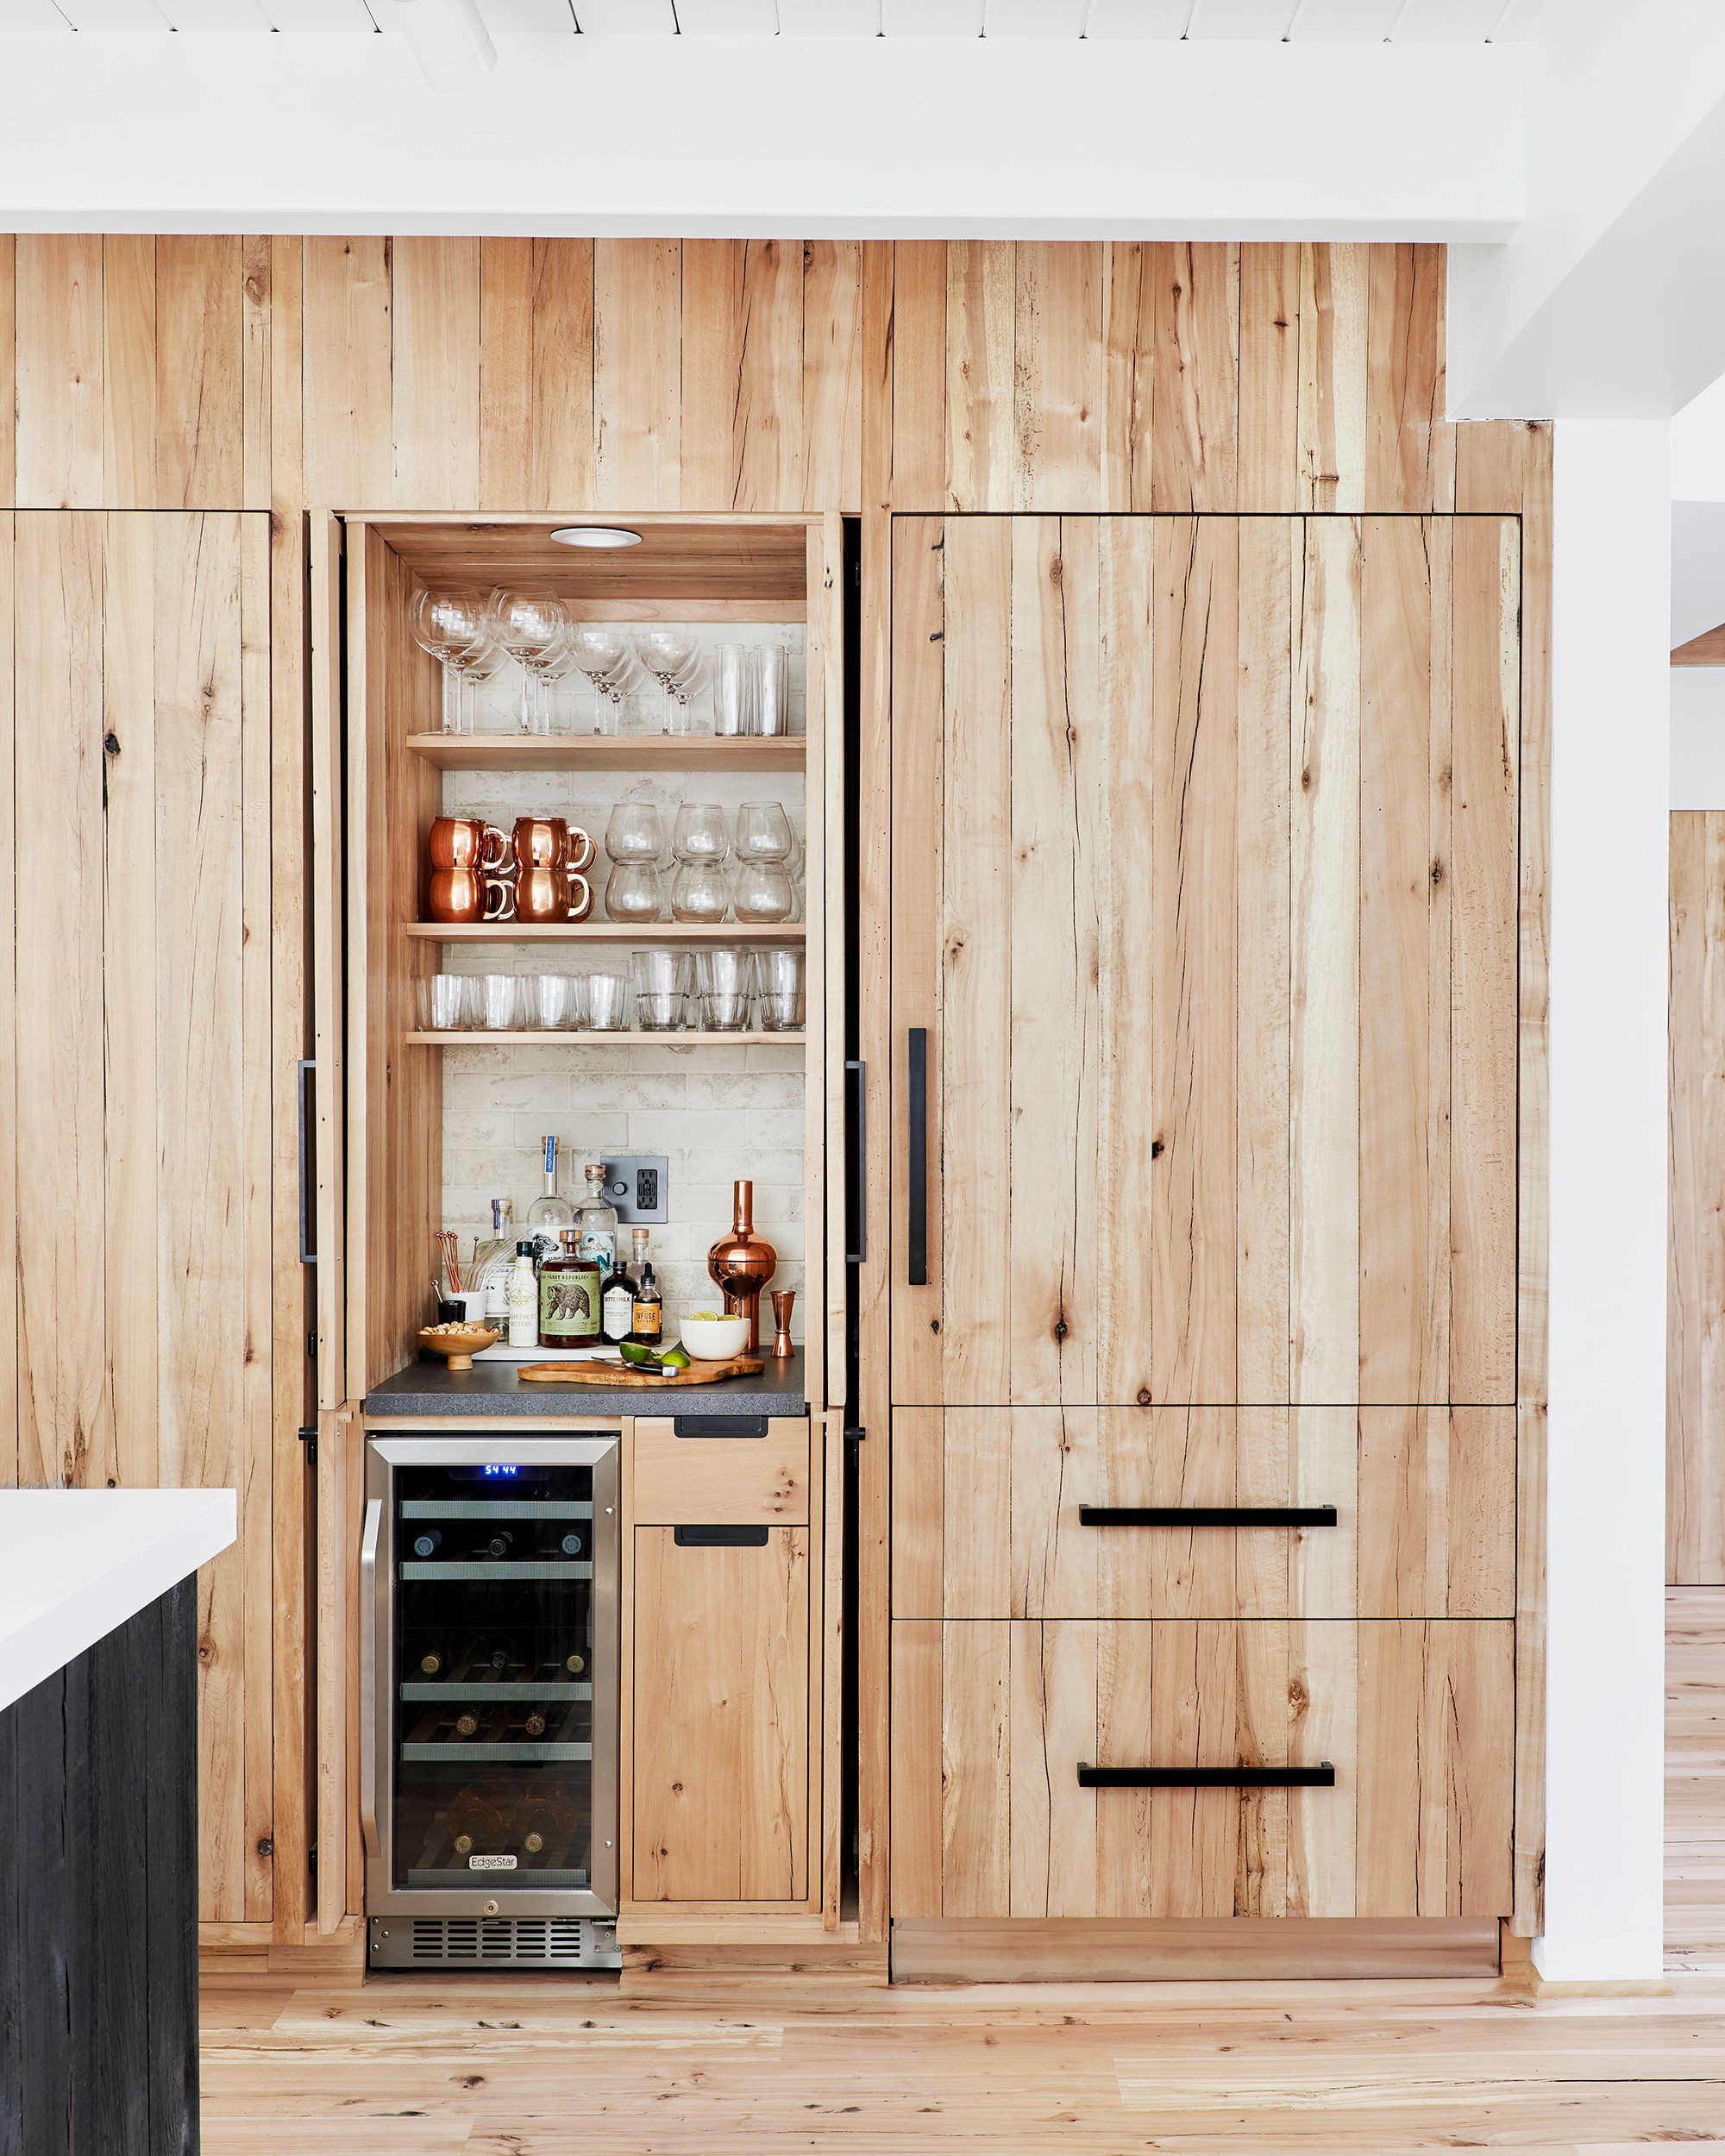 30 Best Home Bar Ideas Cool Home Bar Designs Furniture And Decor